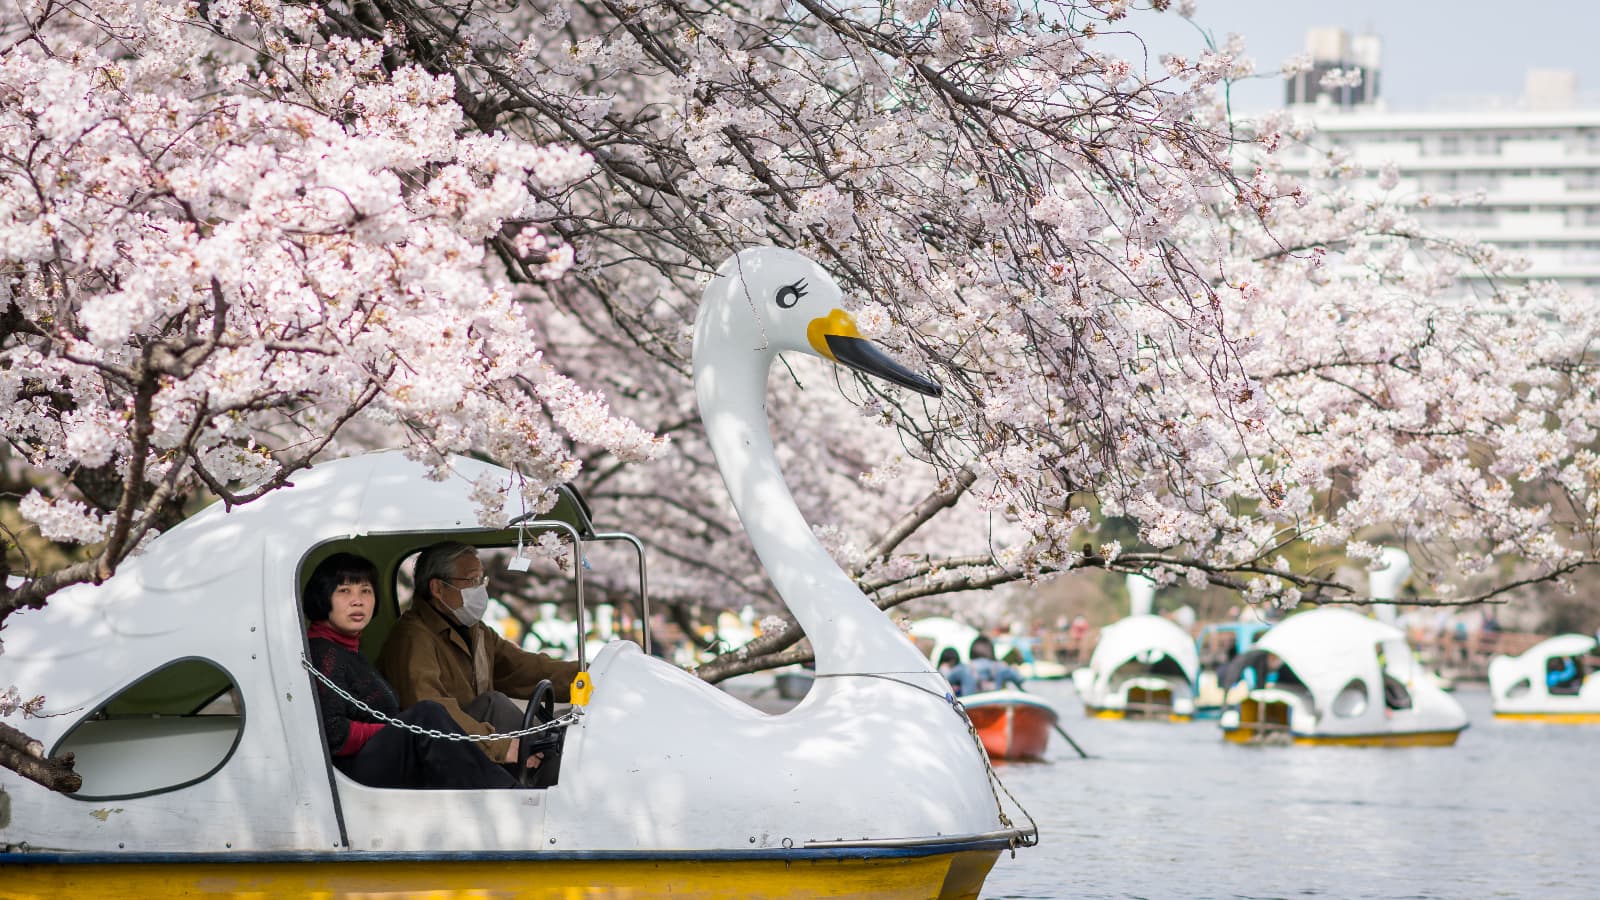 A swan boat in Inokashira park in the cherry blossom season